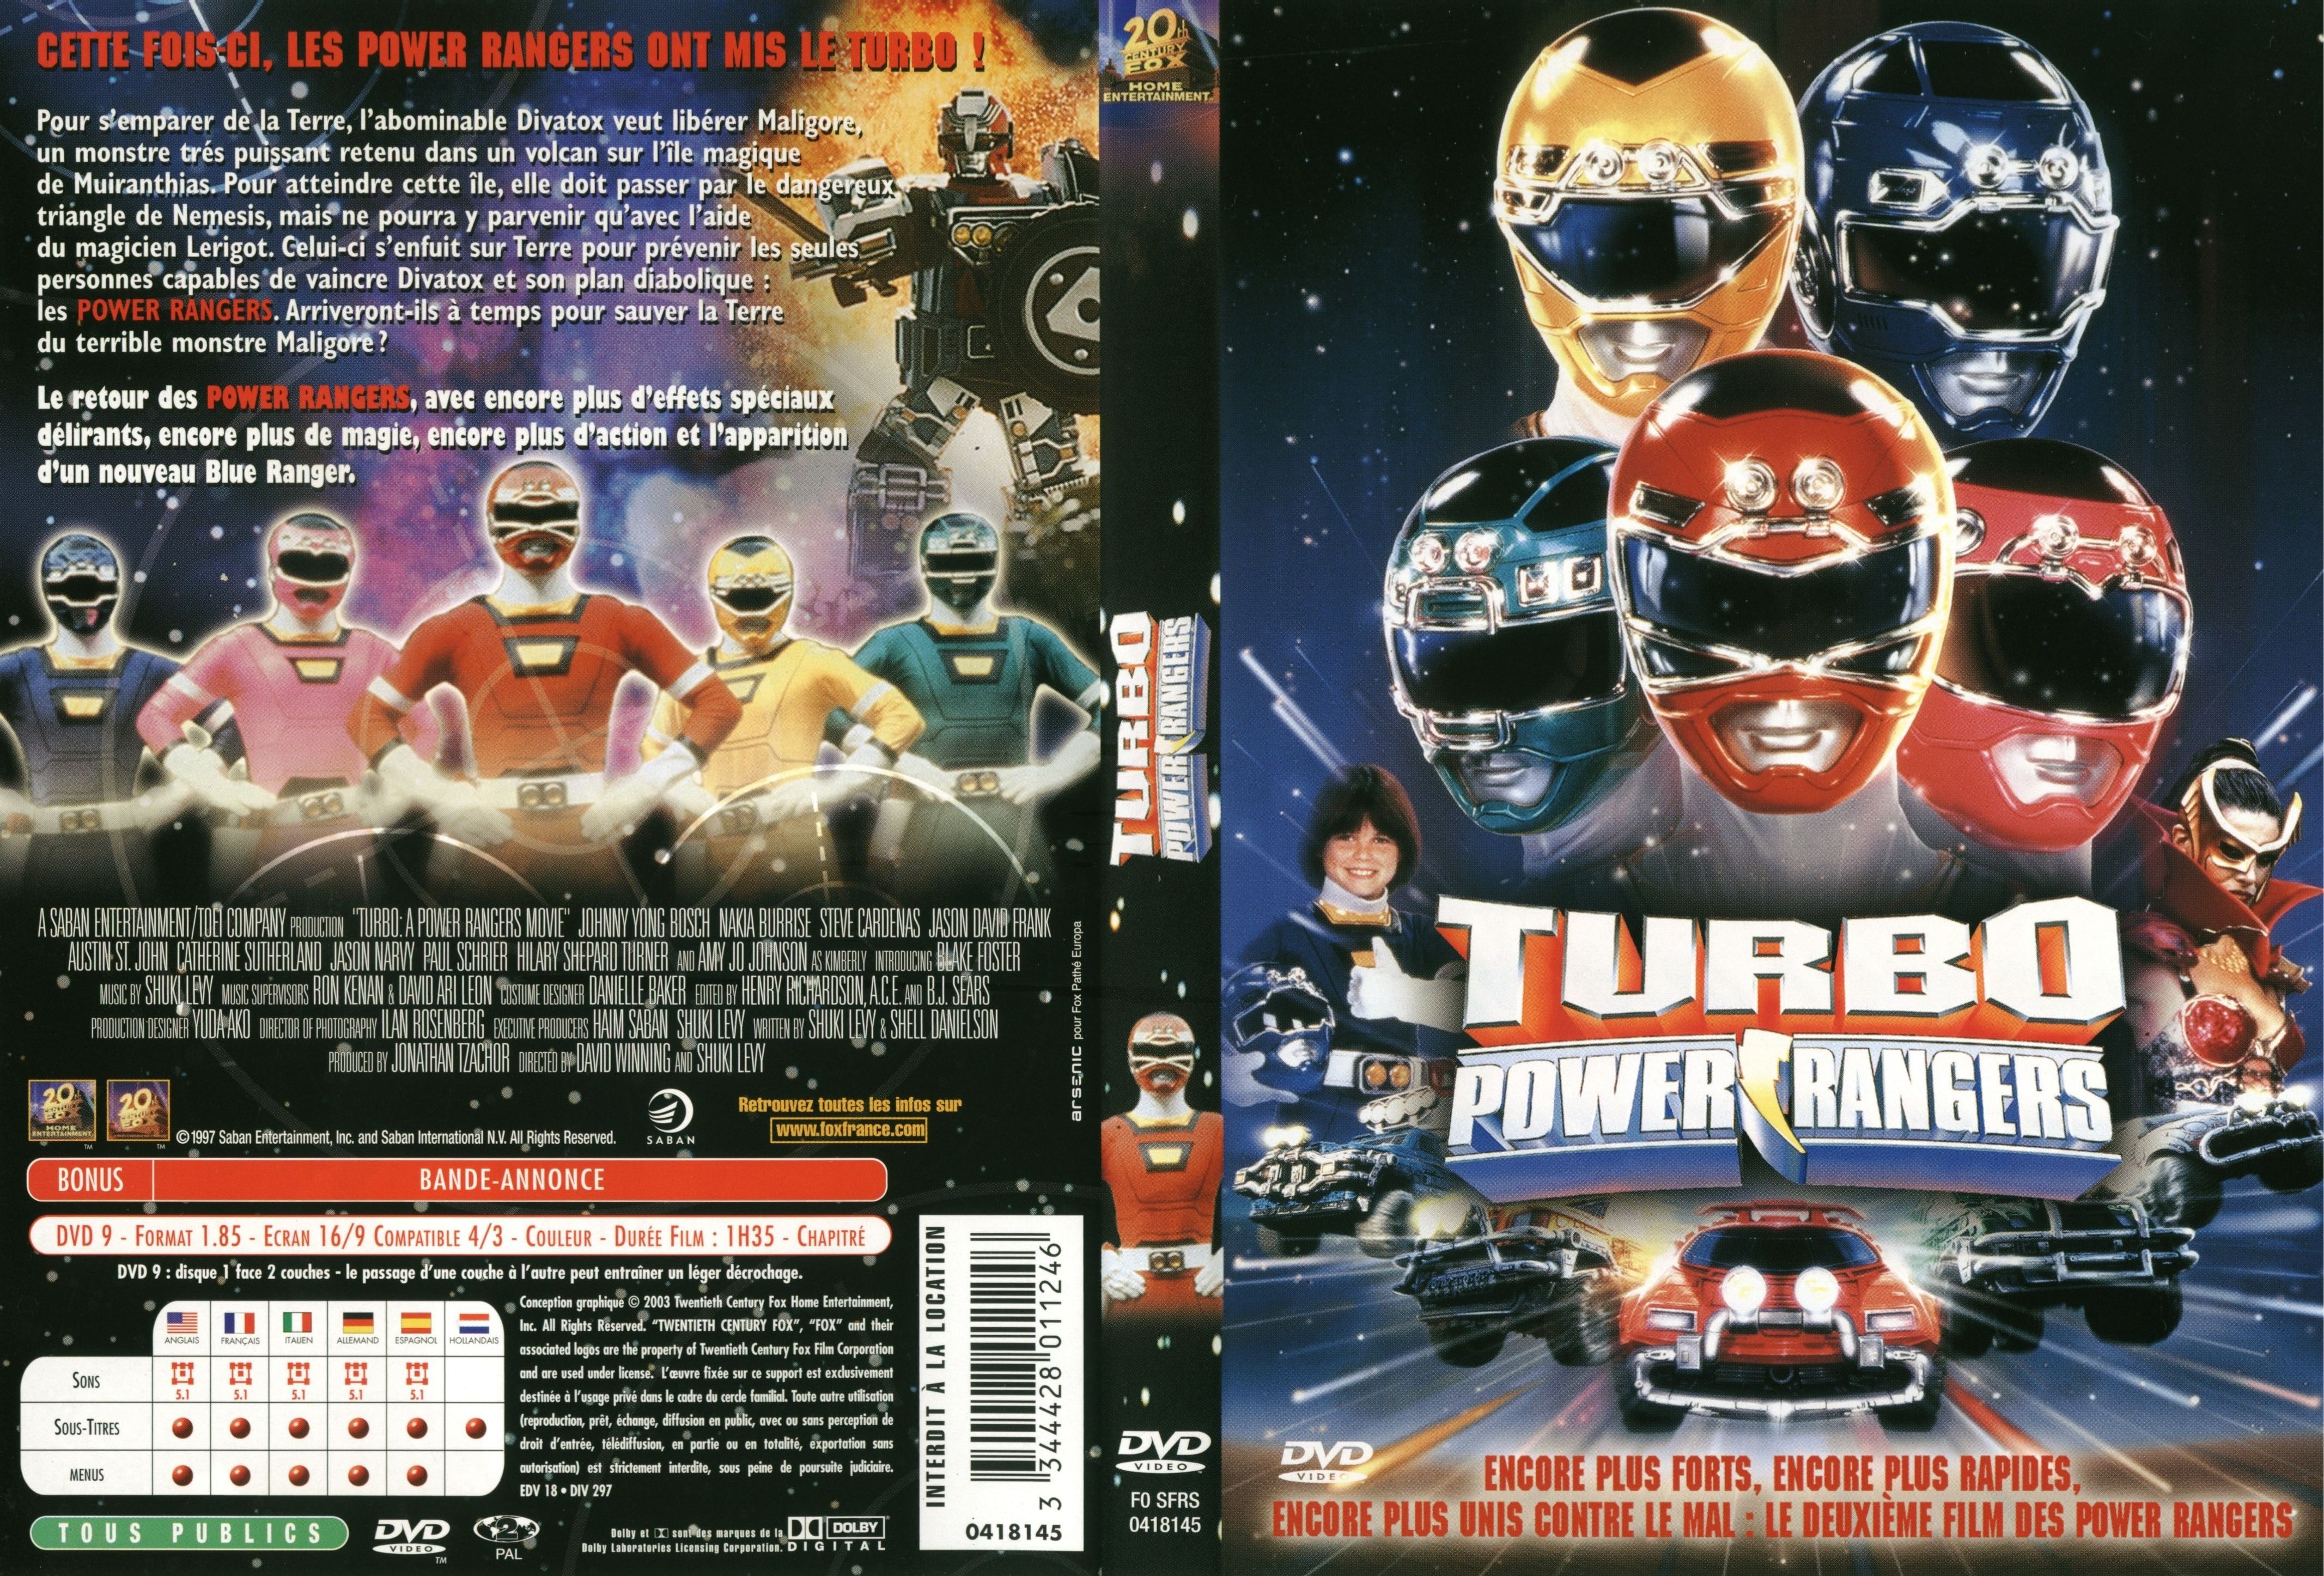 Jaquette DVD Turbo power rangers